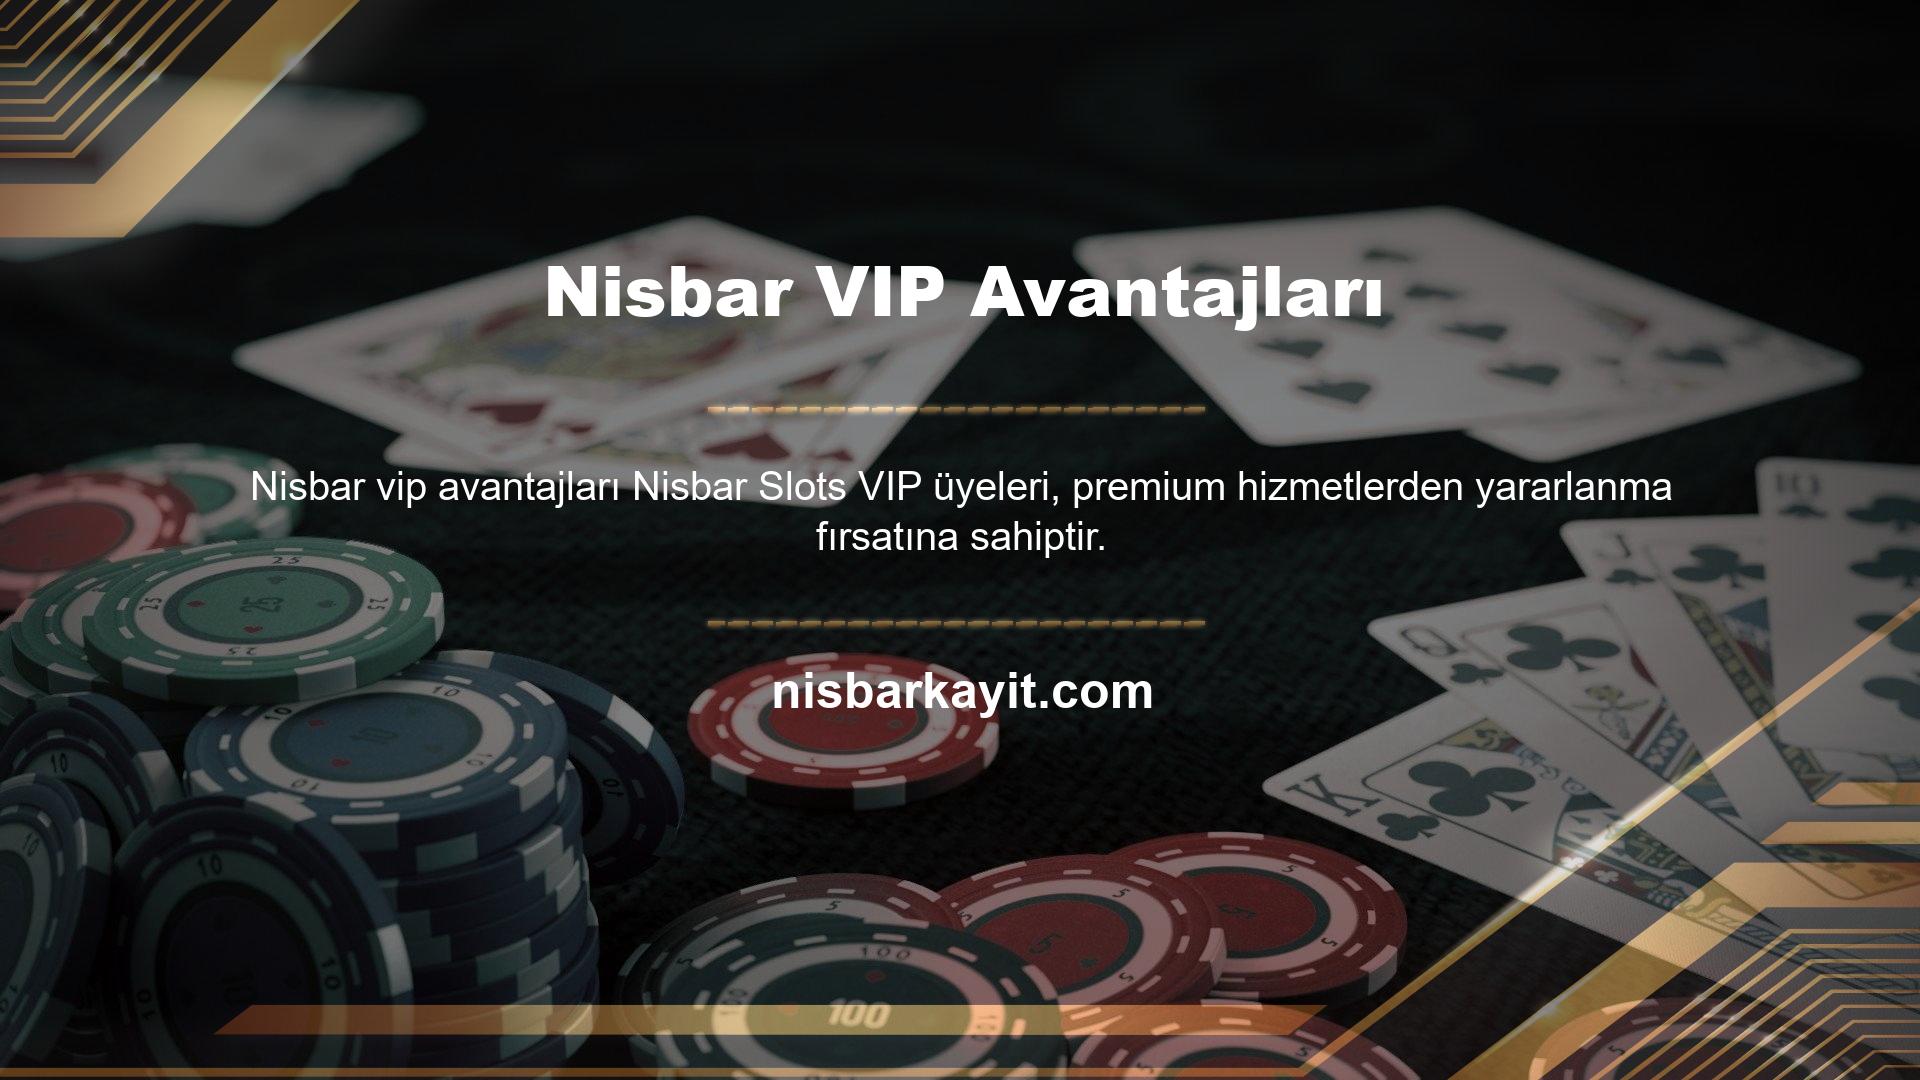 Nisbar VIP Avantajları